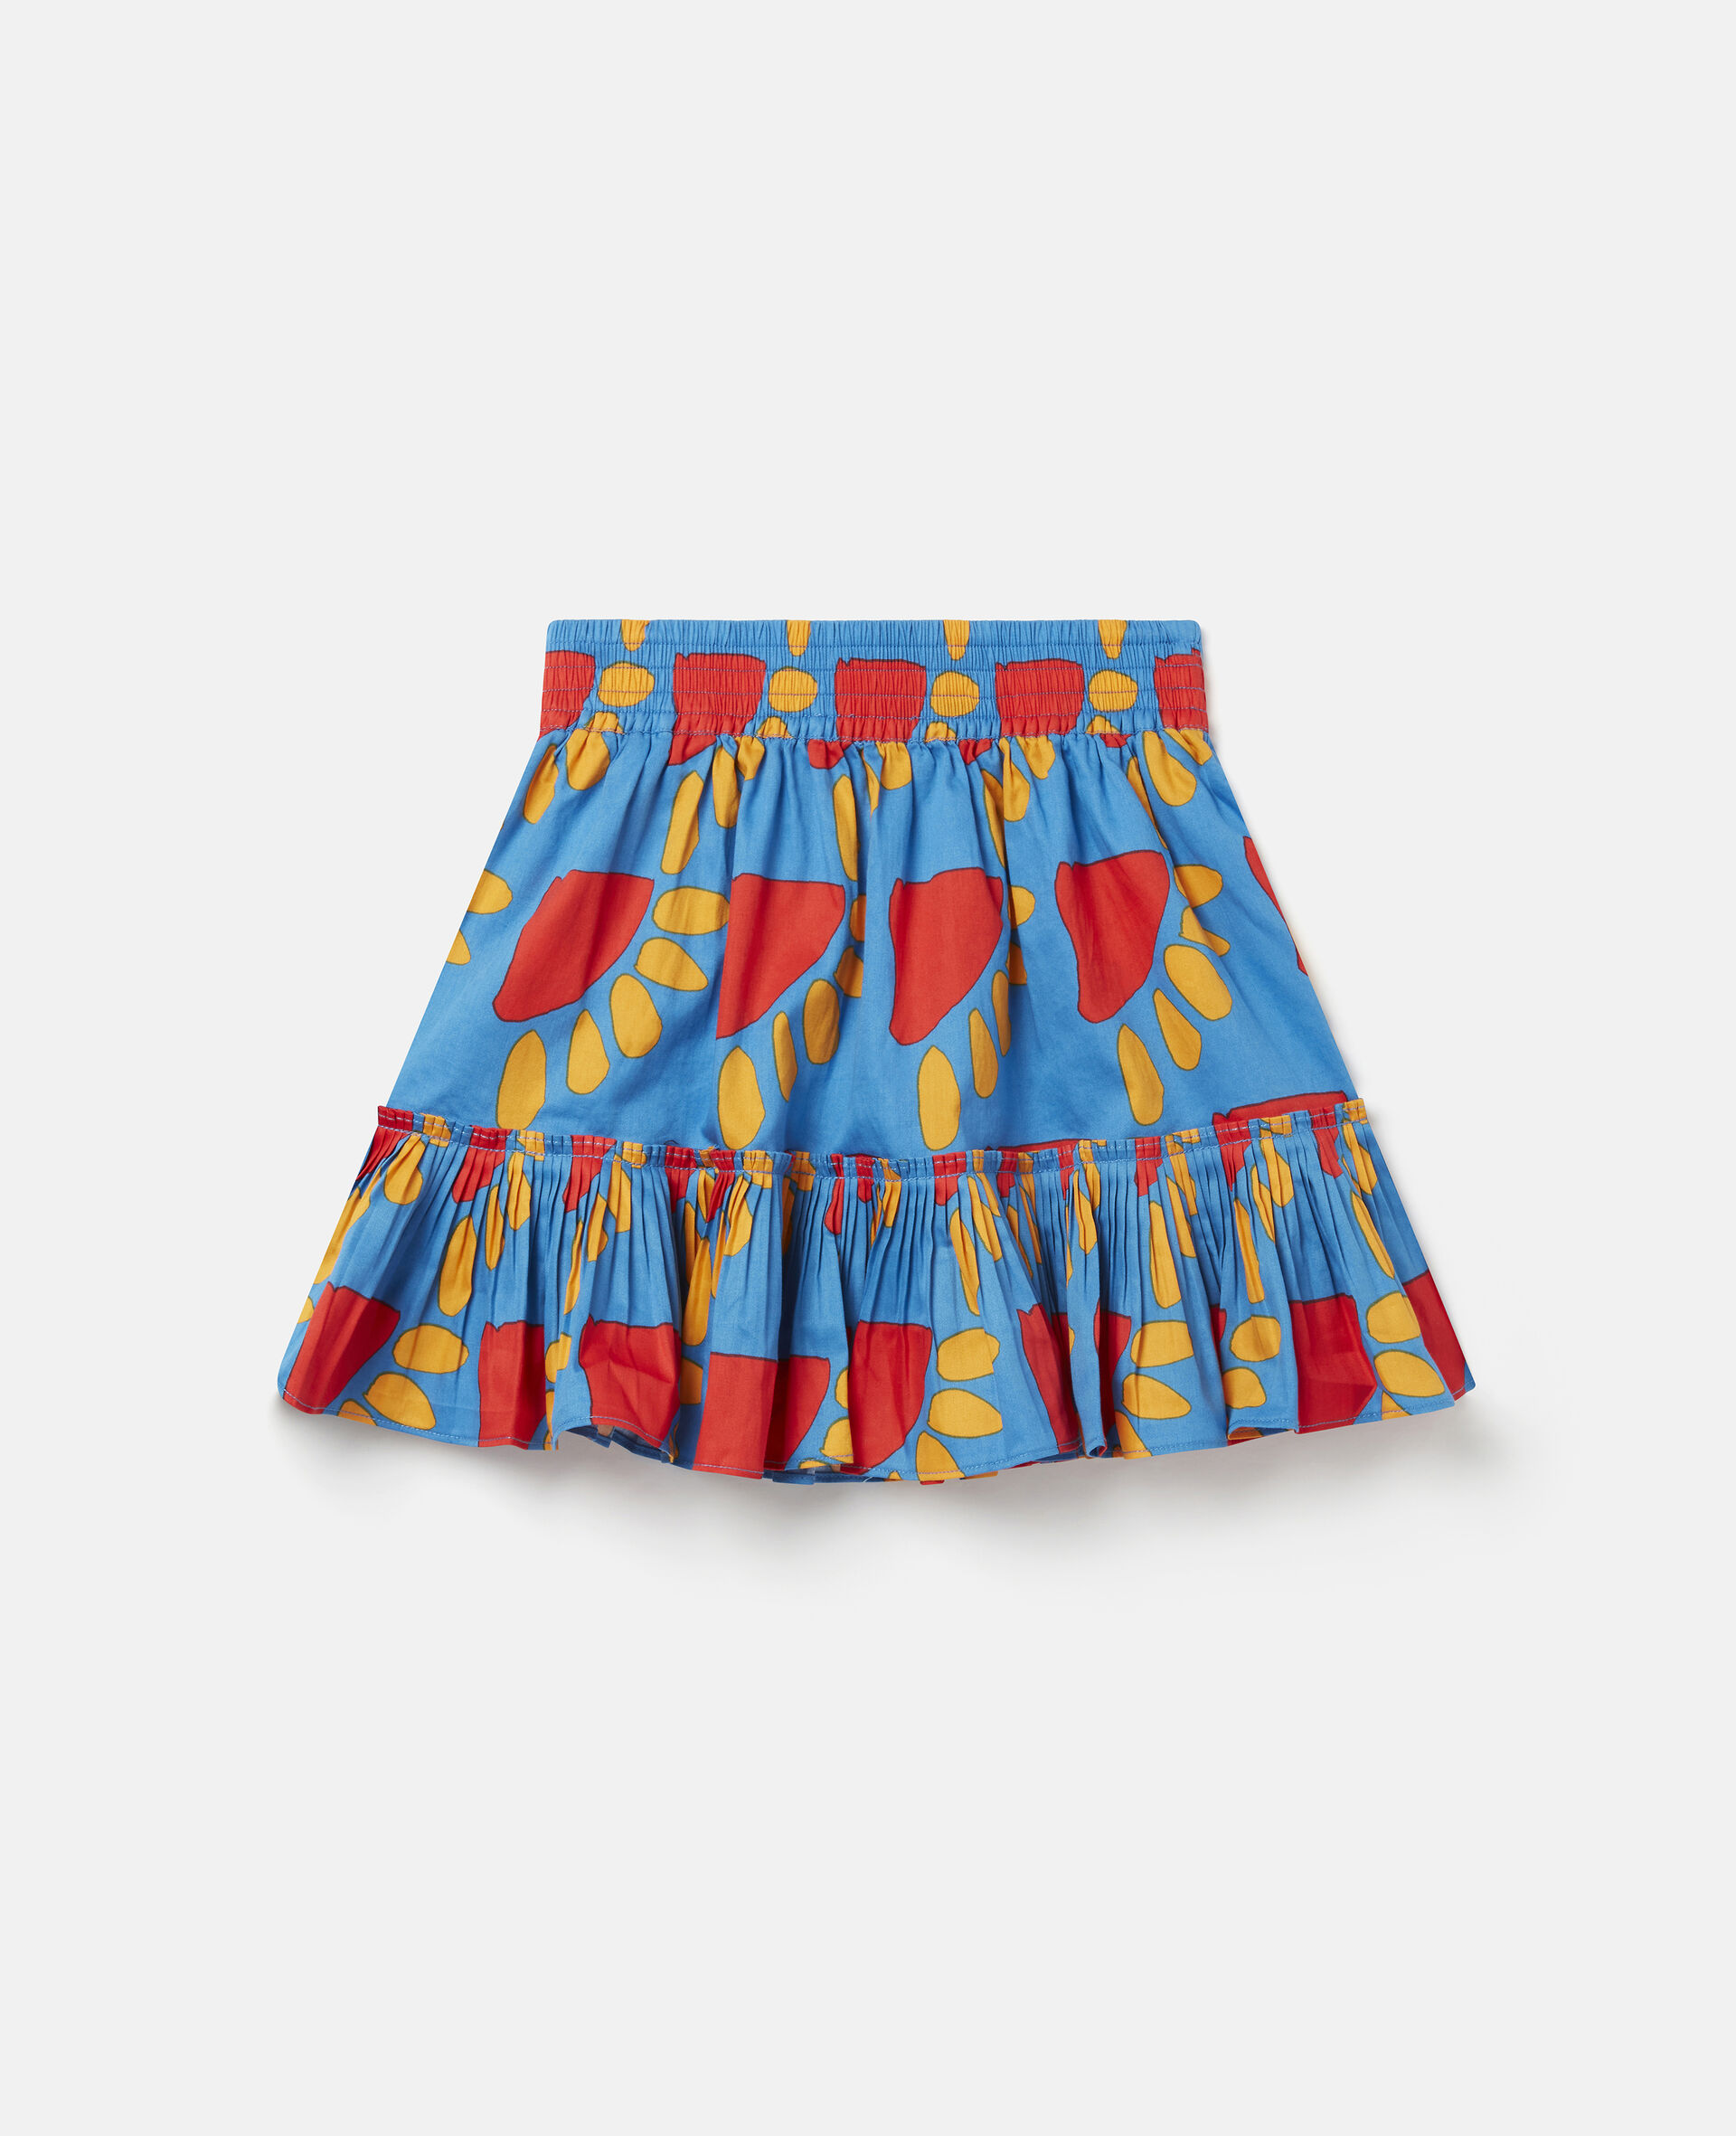 Graphic Sun Print Cotton Skirt-Blue-large image number 0